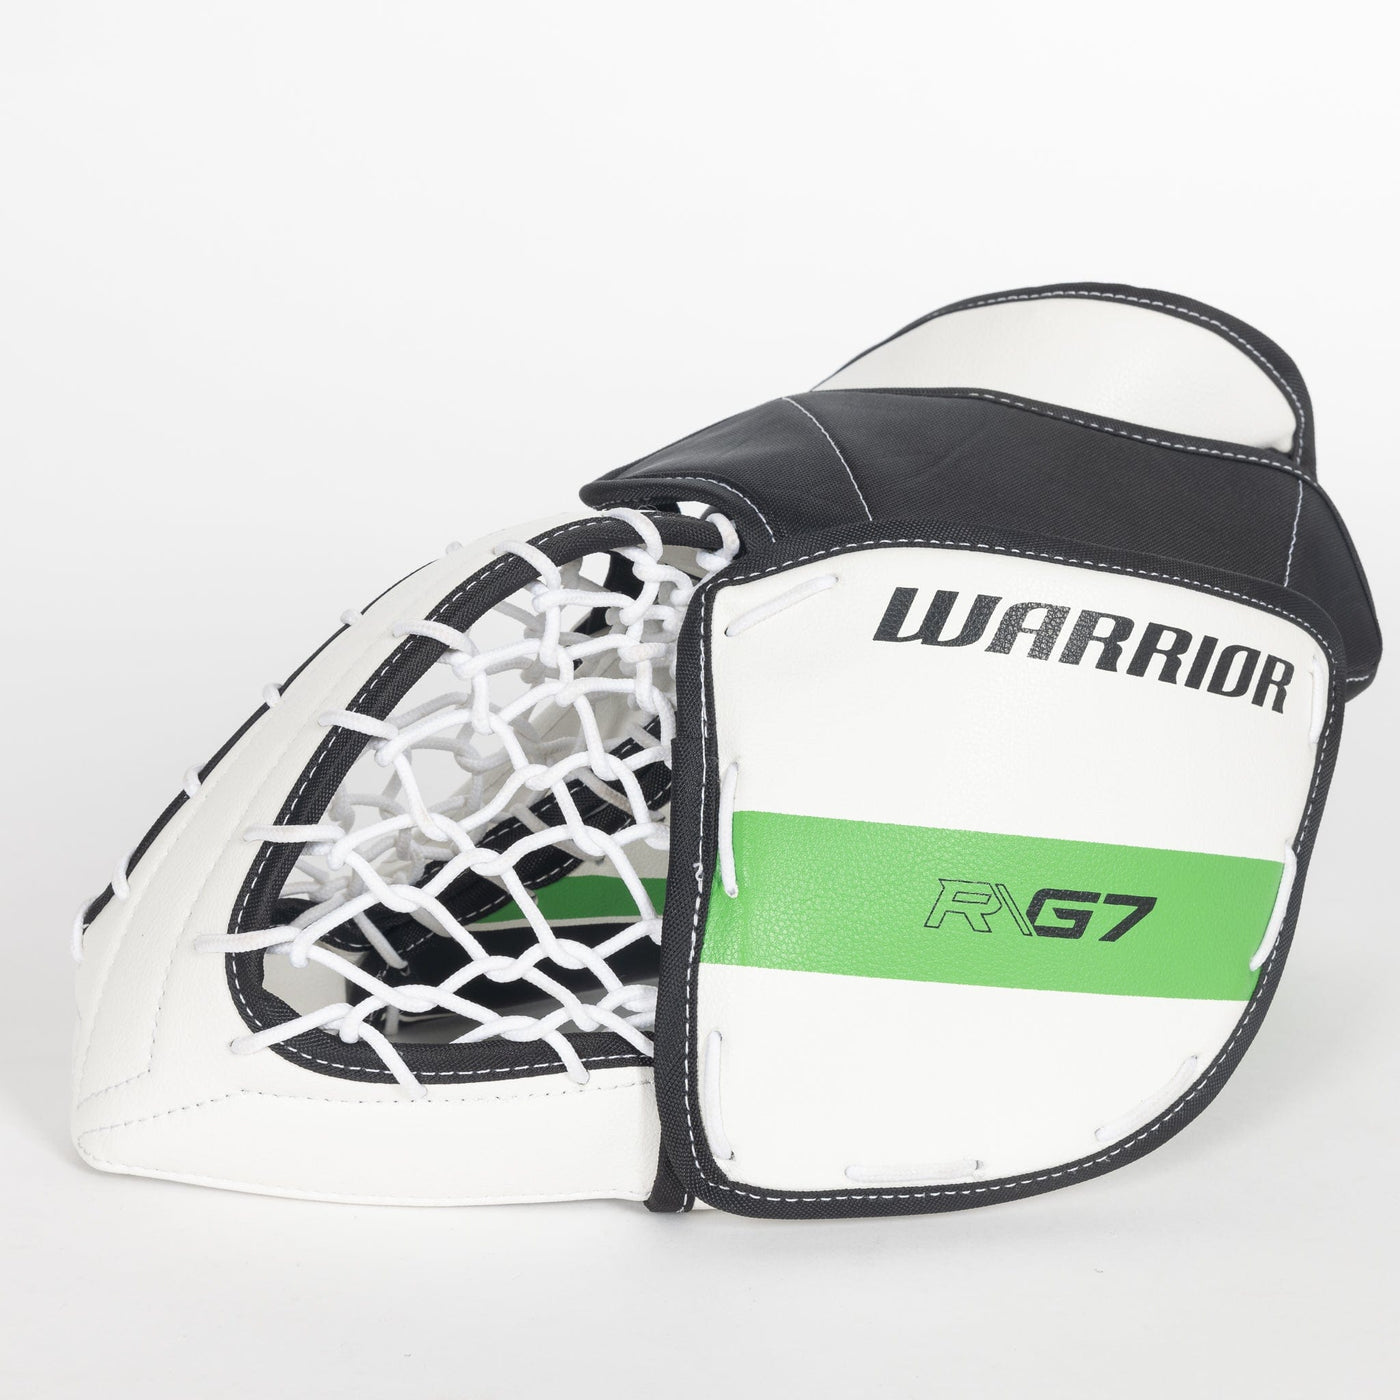 Warrior G7 Youth Goalie Catcher - TheHockeyShop.com